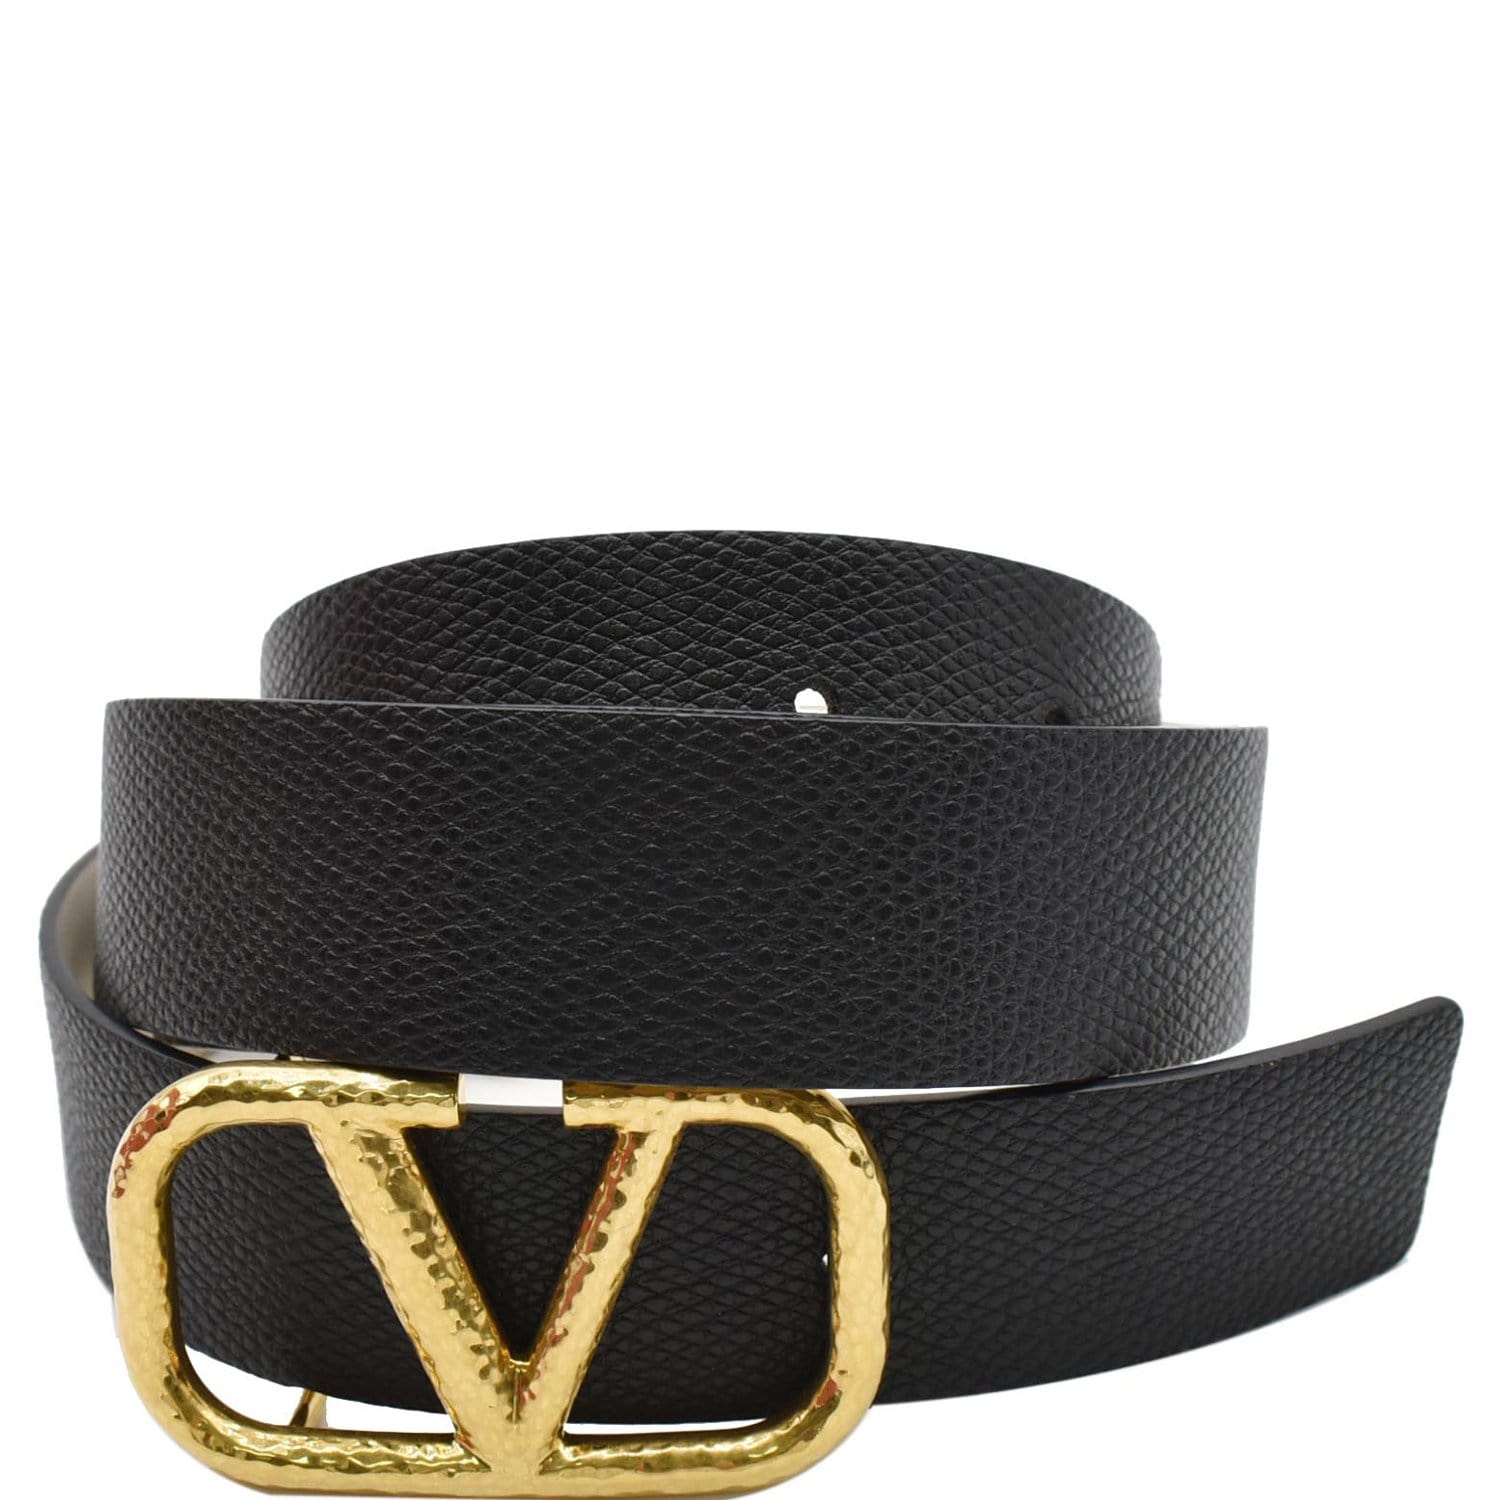 V Logo Jacquard Leather Trimmed Belt in Black - Valentino Garavani